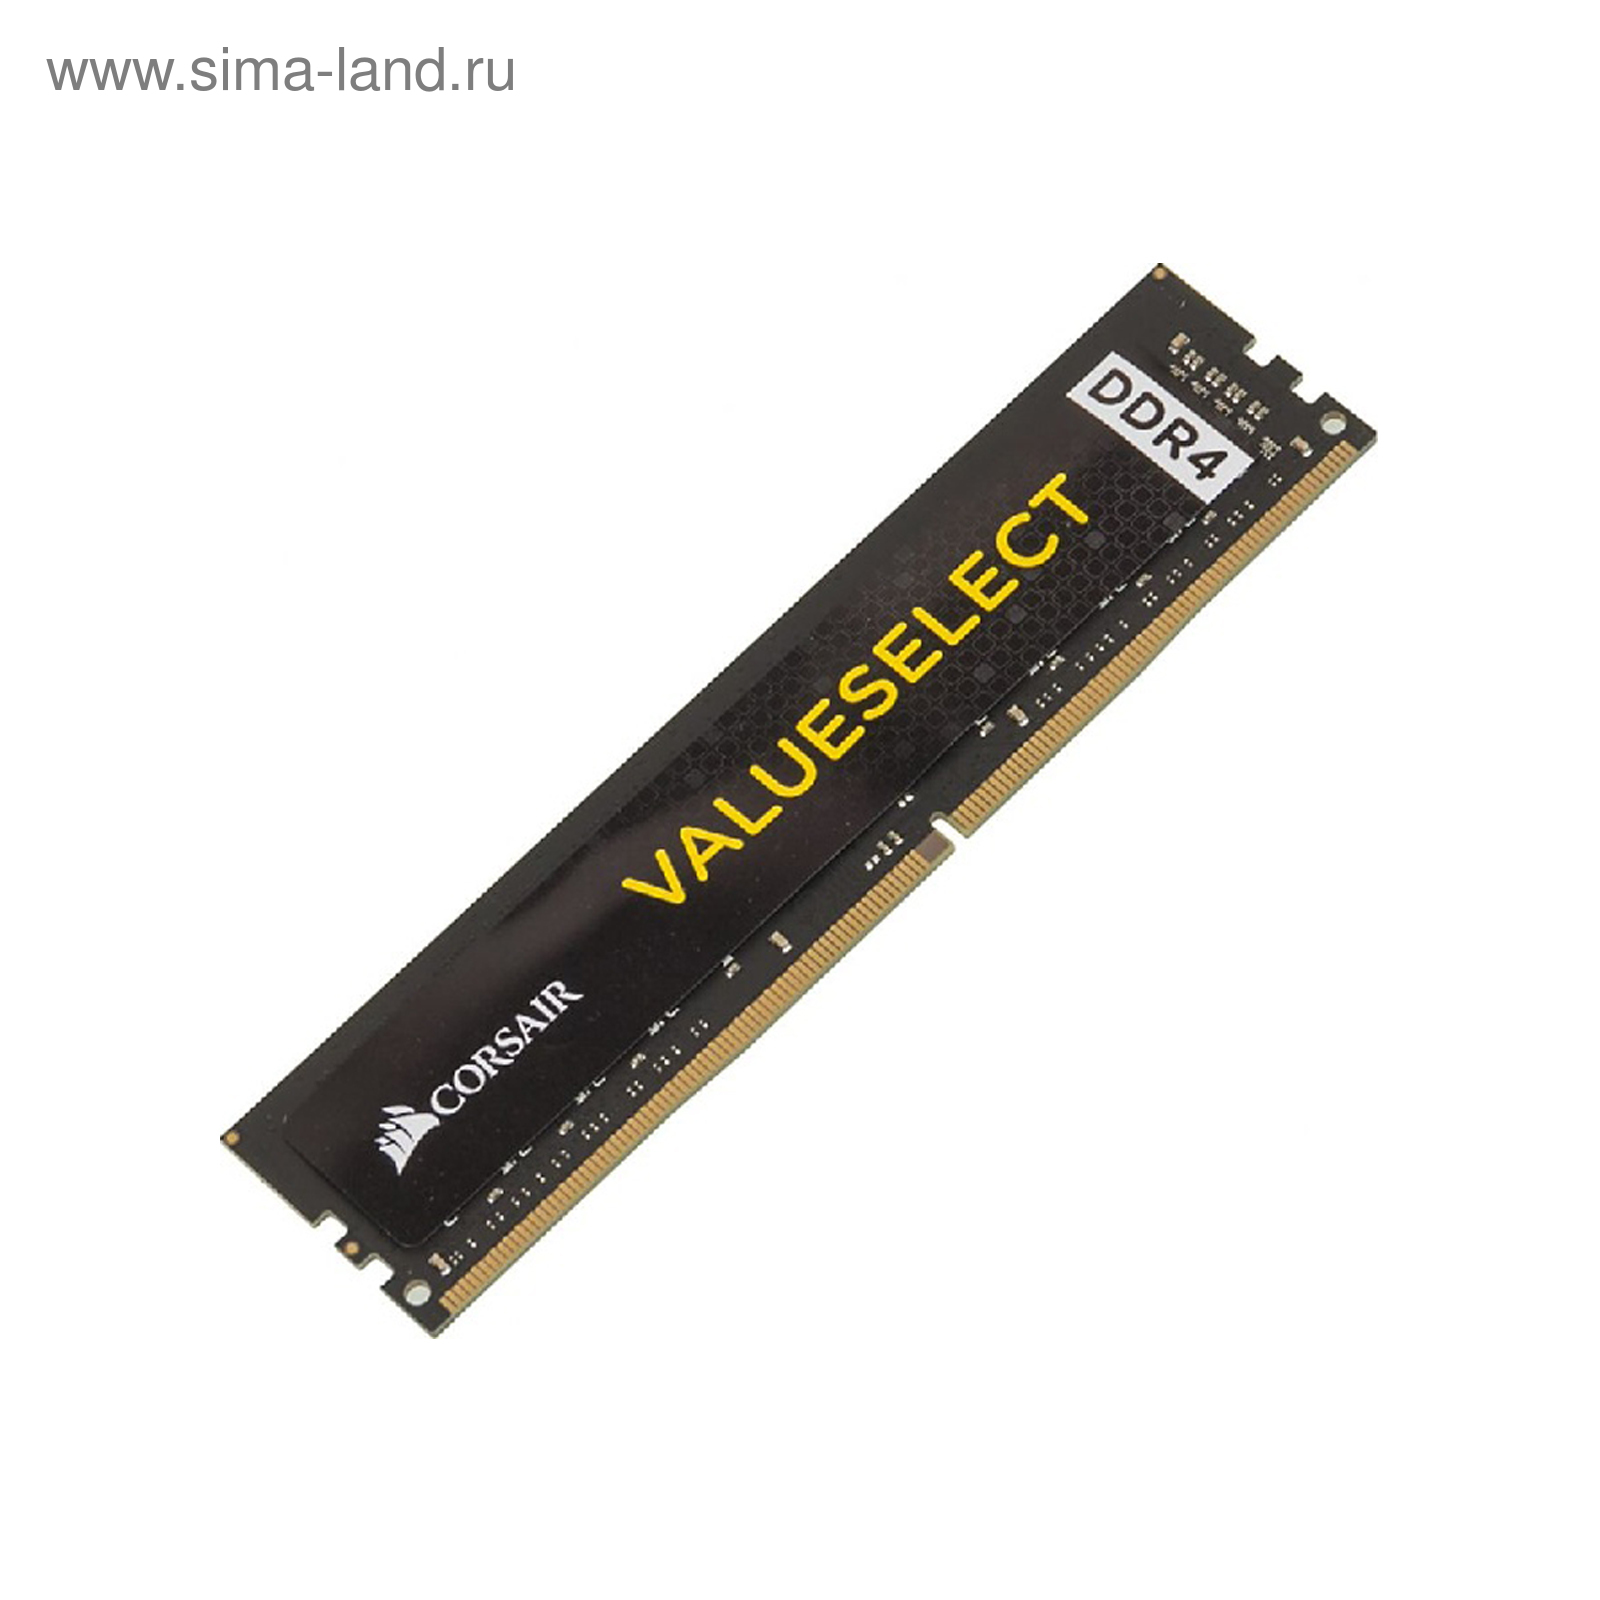 Память DDR4 16Gb 2666MHz Corsair CMV16GX4M1A2666C18 PC4-19200 CL18 DIMM 288-pin 1.2В (3463394) - по цене от 6 689.00 руб. | Интернет магазин SIMA-LAND.RU